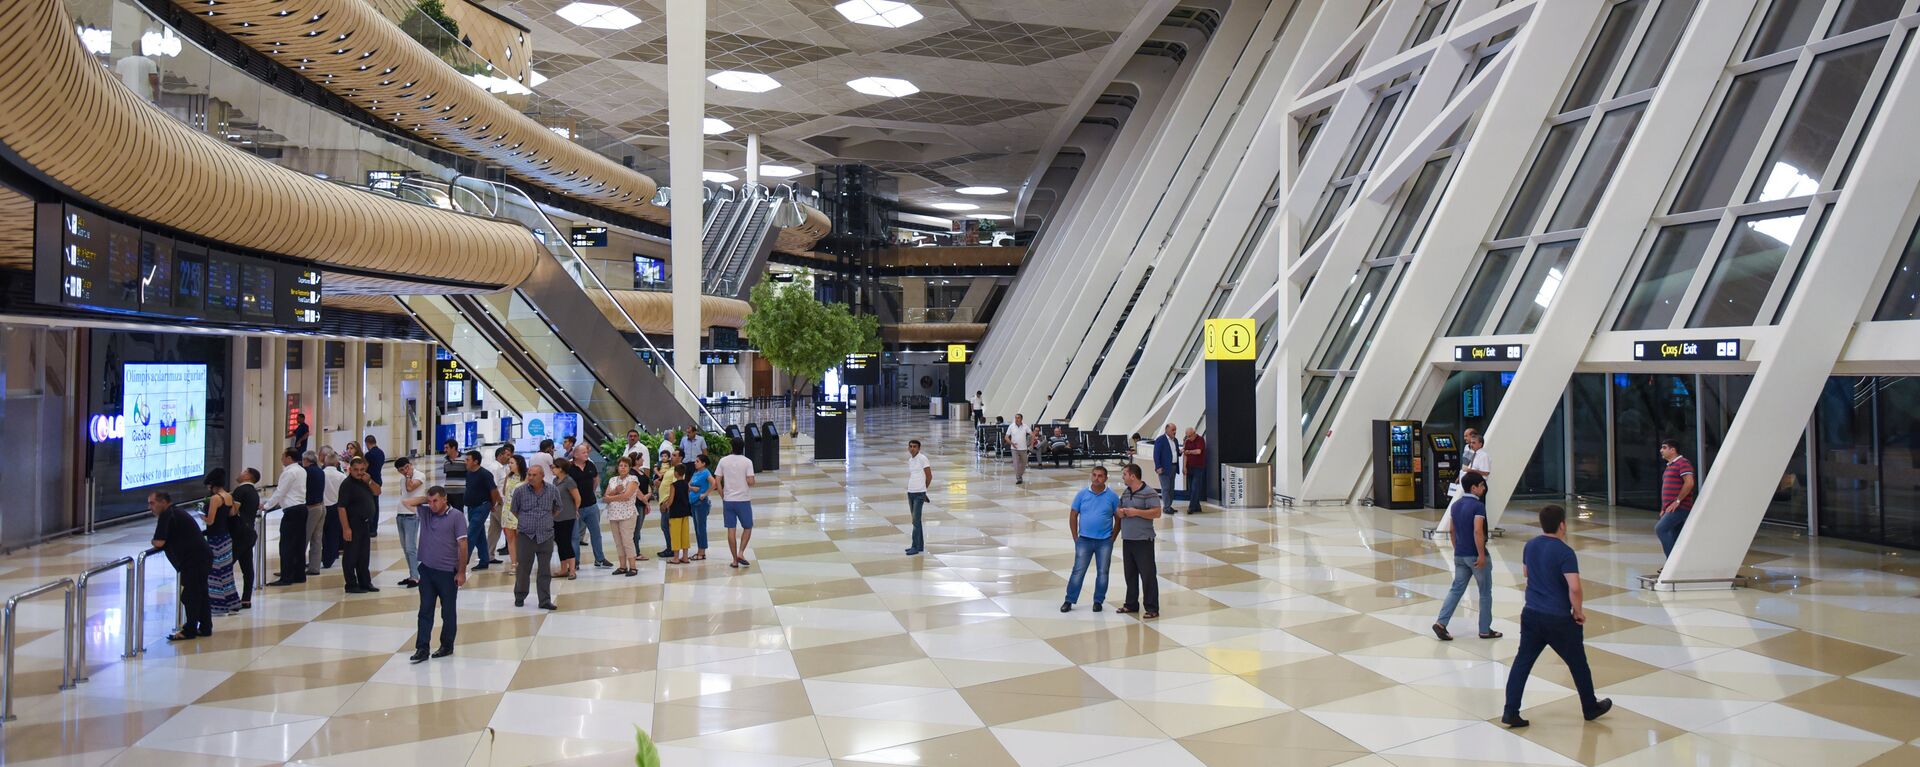 Вестибюль Международного аэропорта имени Гейдара Алиева в Баку - Sputnik Արմենիա, 1920, 11.06.2021